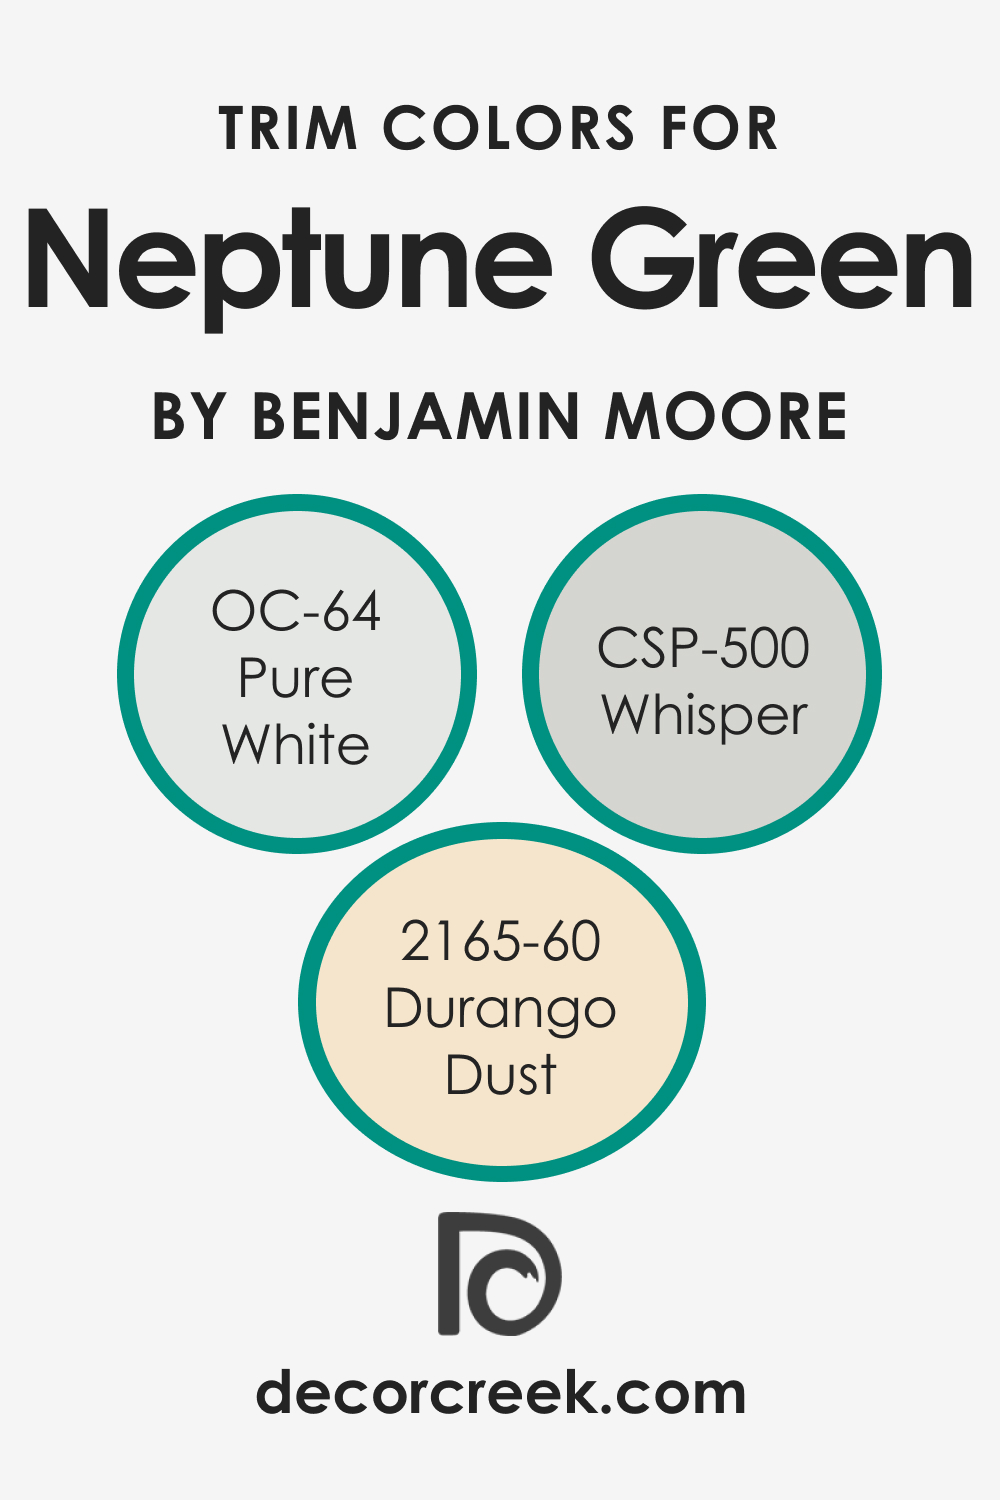 Trim Colors of Neptune Green 658